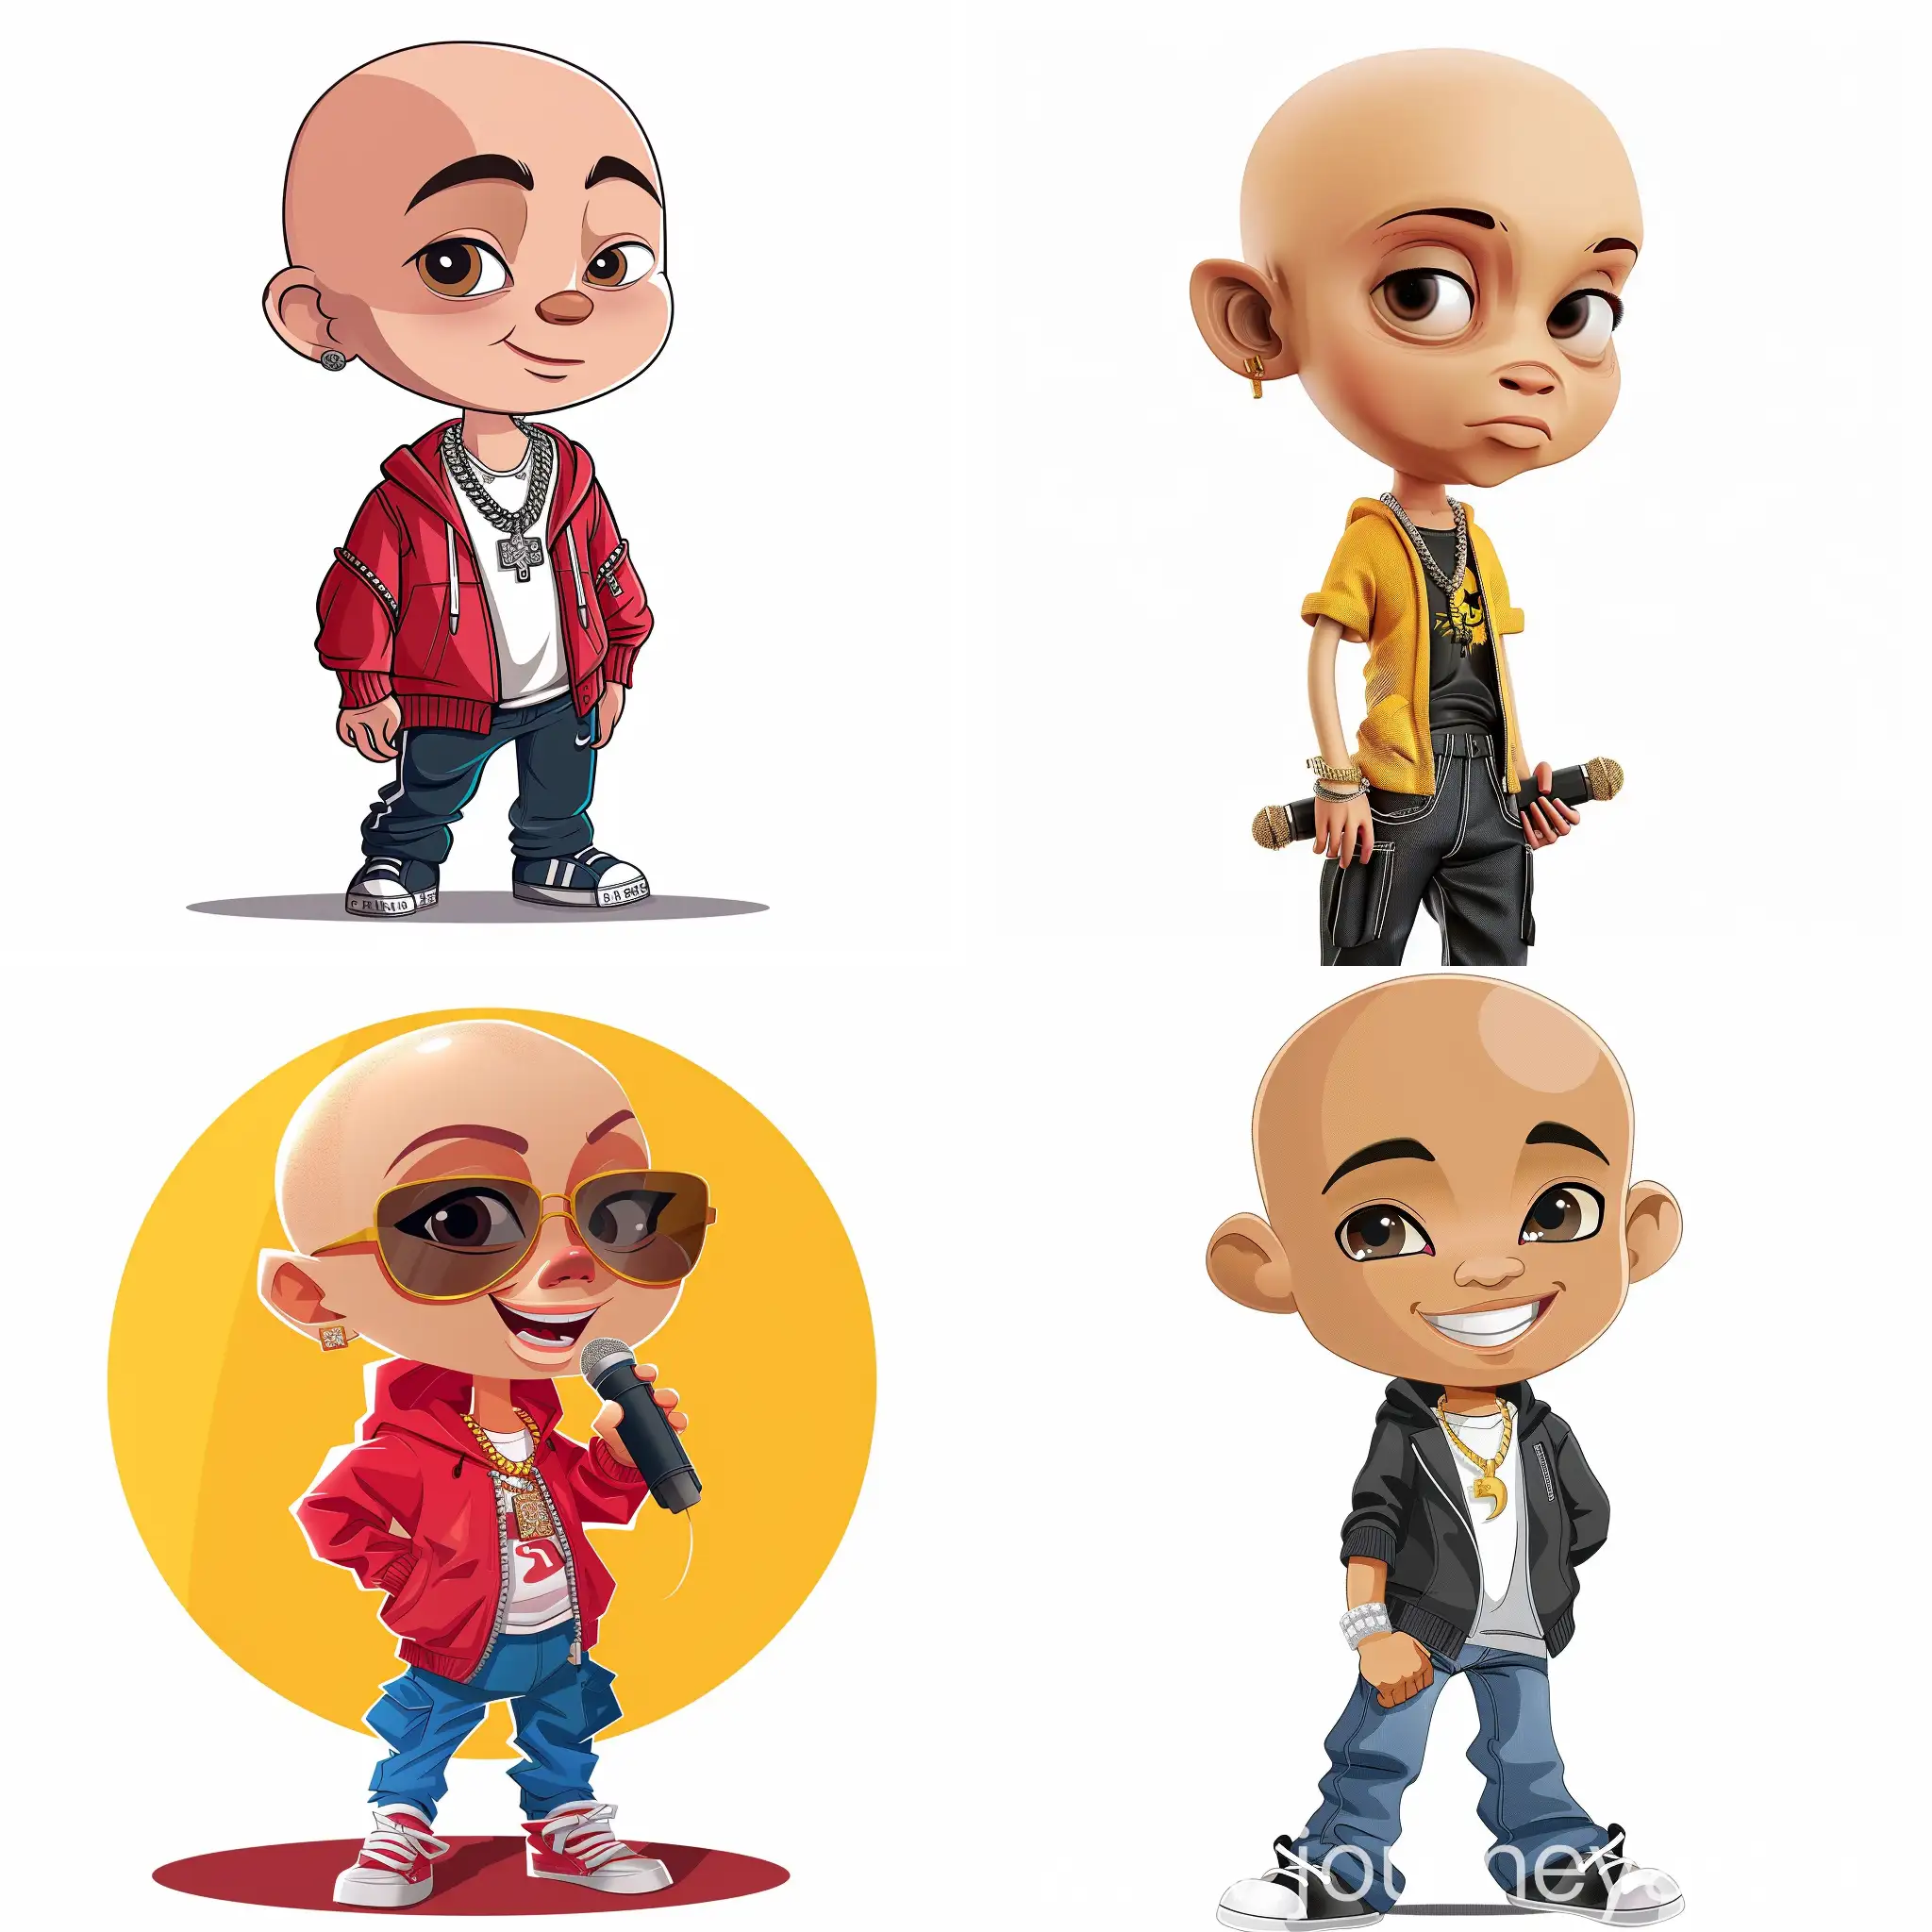 Bald Rapper Boy Cartoon Character